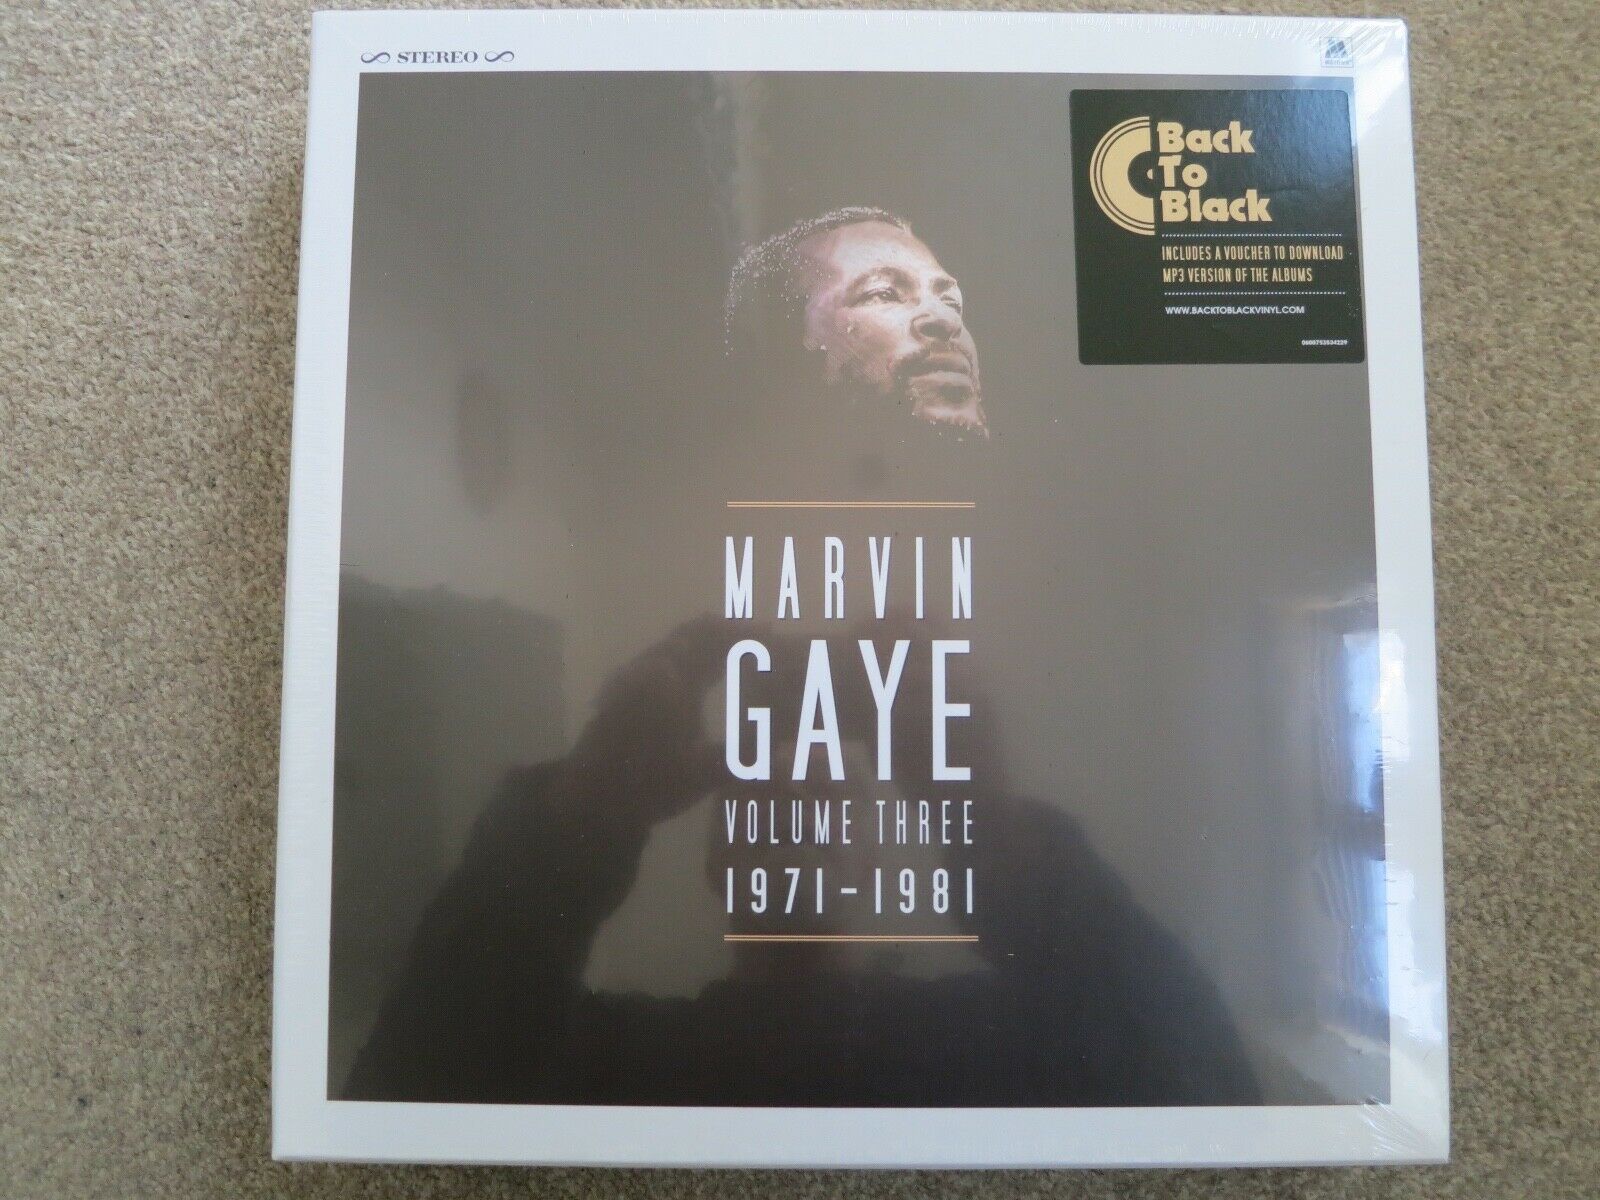  Marvin Gaye - Box Set Volume 3 - 1971-81 - 7 x Vinyl LP - New  Sealed - auction details